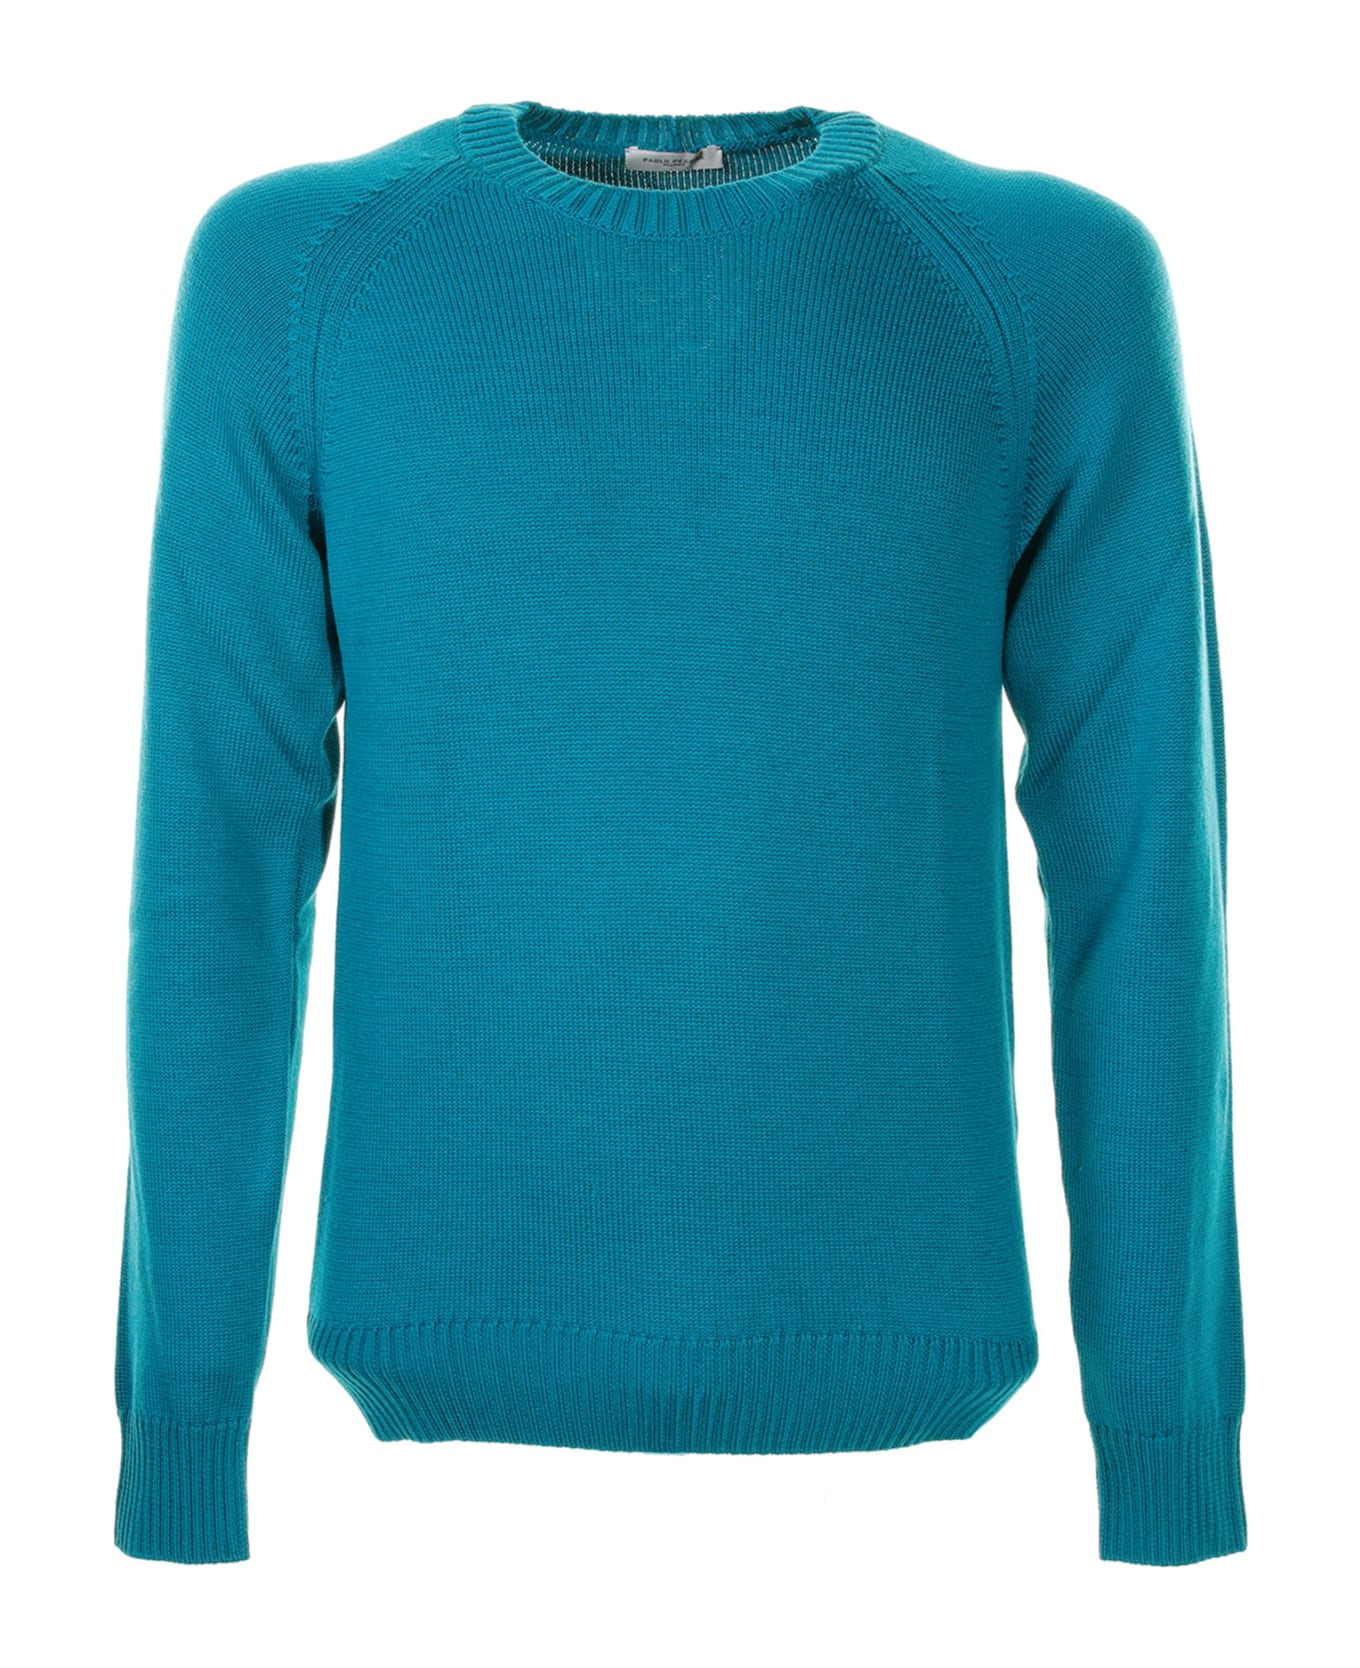 Paolo Pecora Turquoise Crewneck Sweater - PAVONE